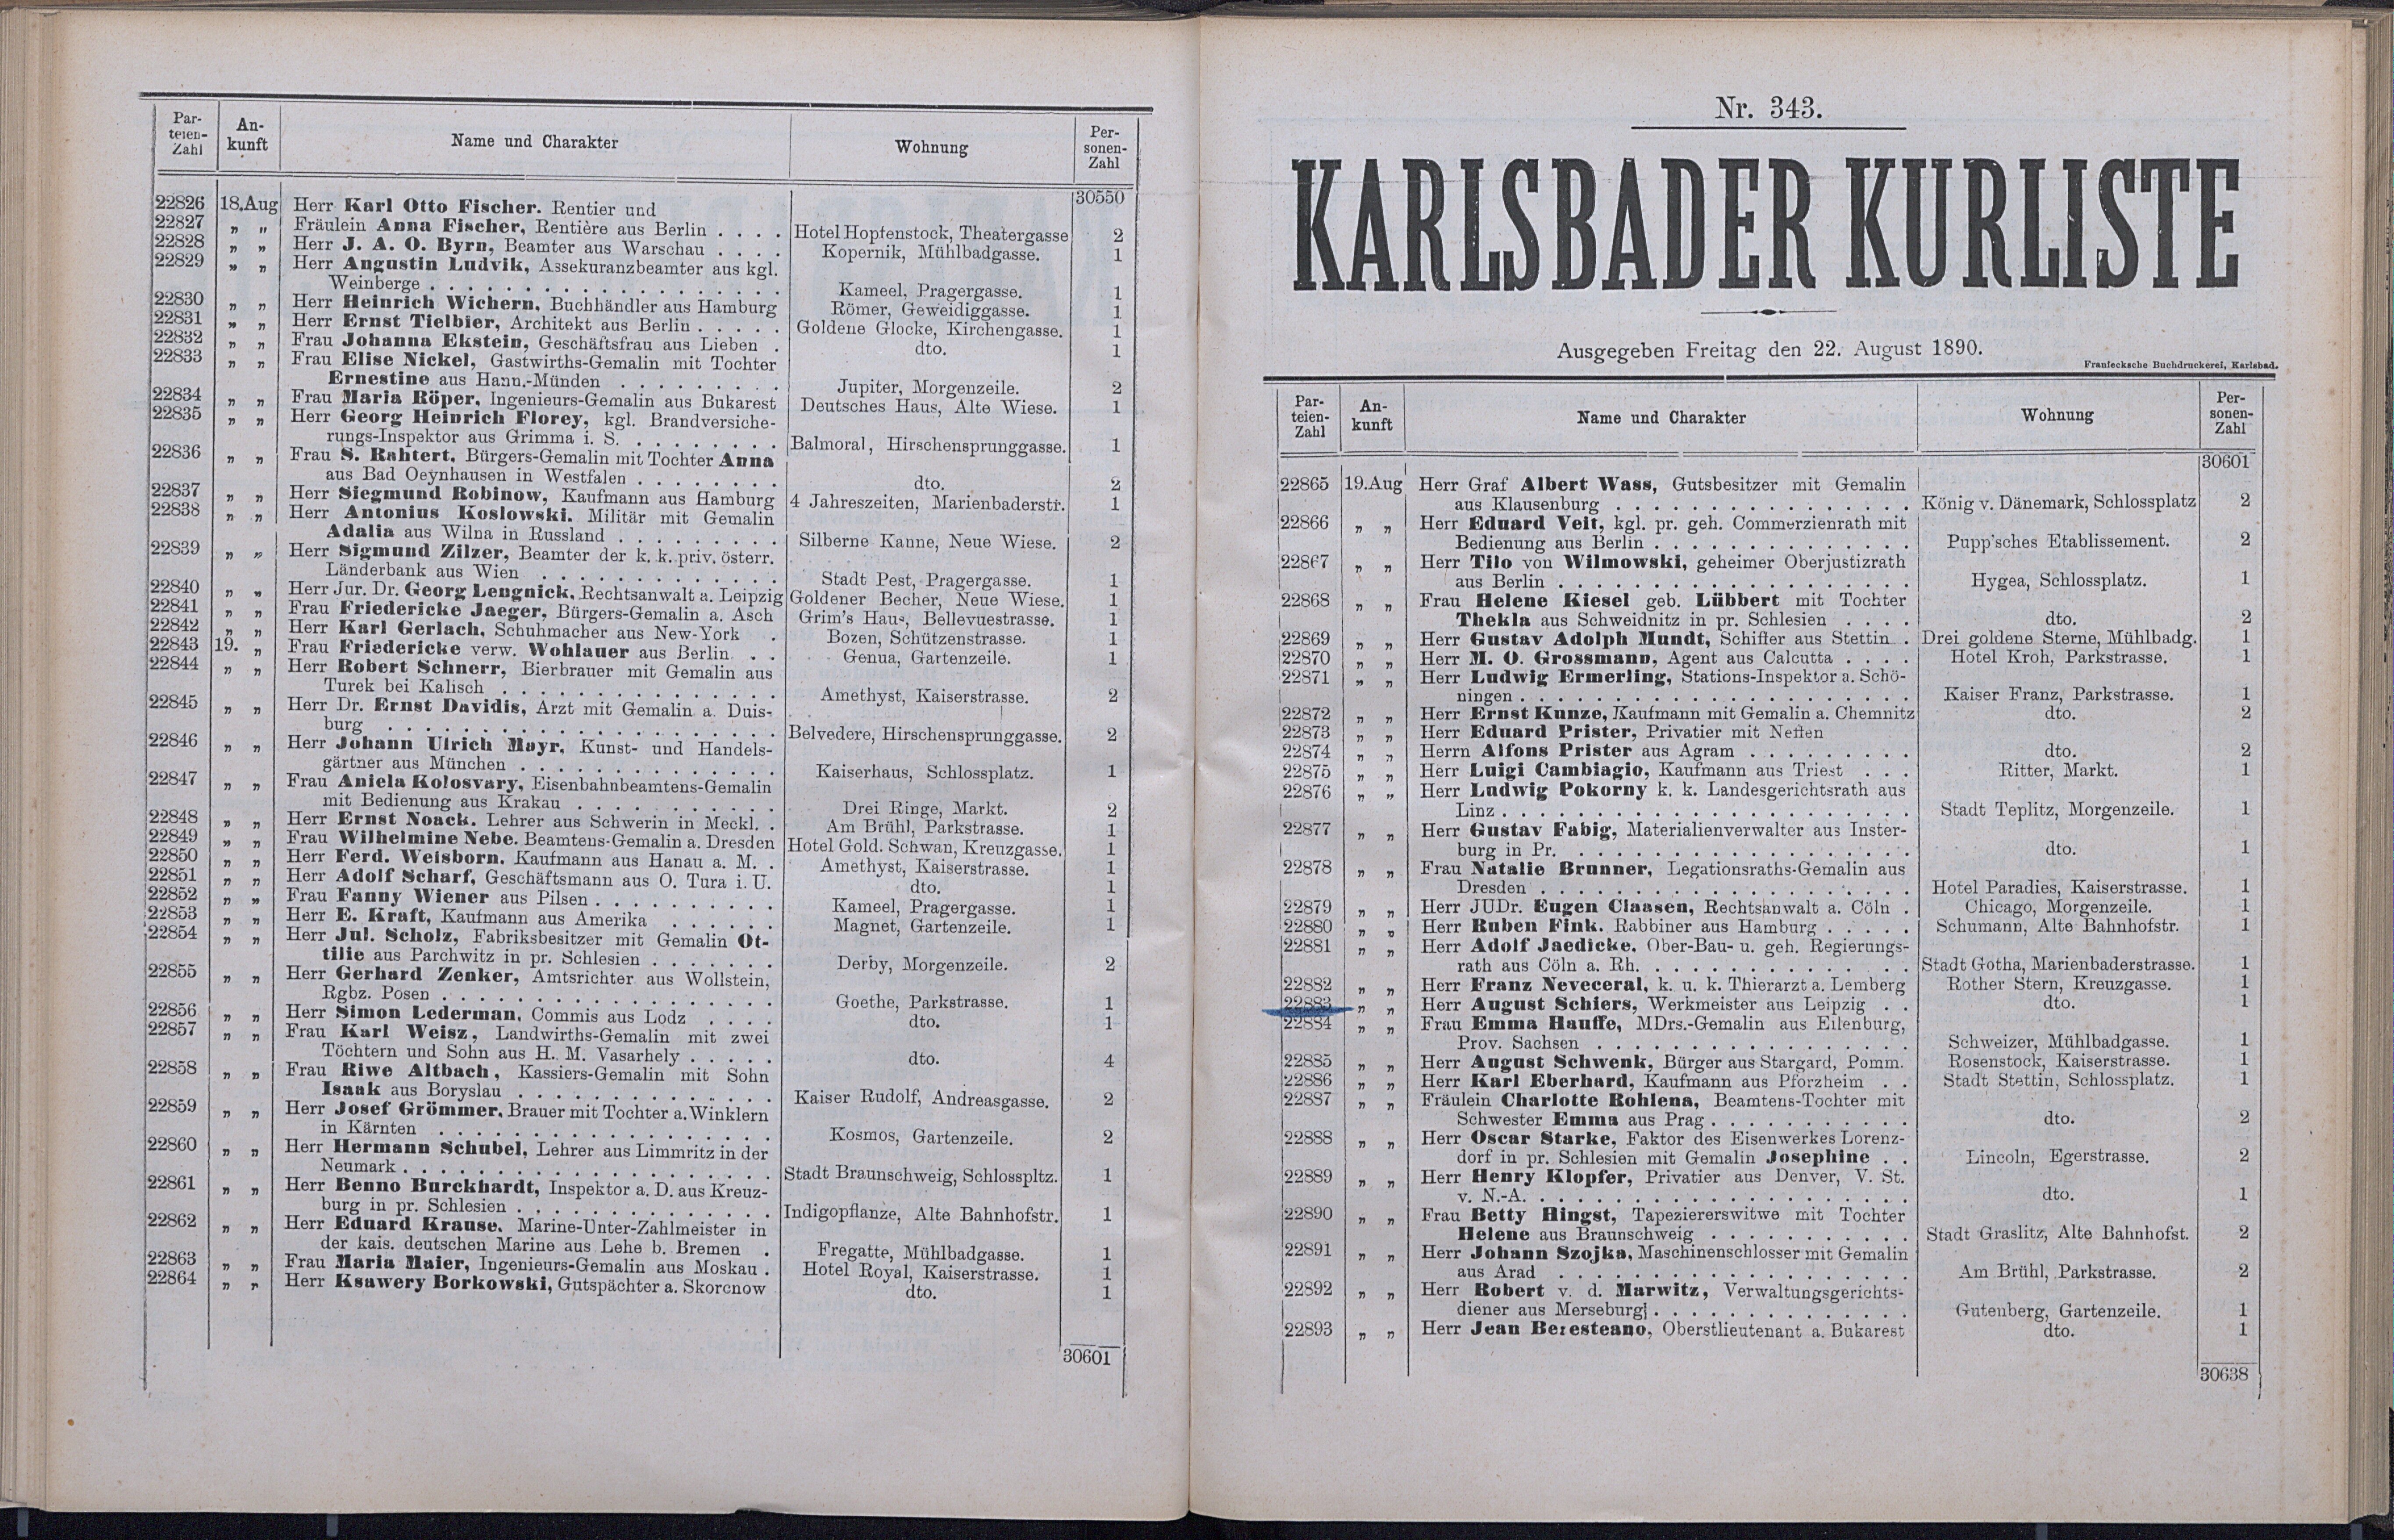 362. soap-kv_knihovna_karlsbader-kurliste-1890_3630